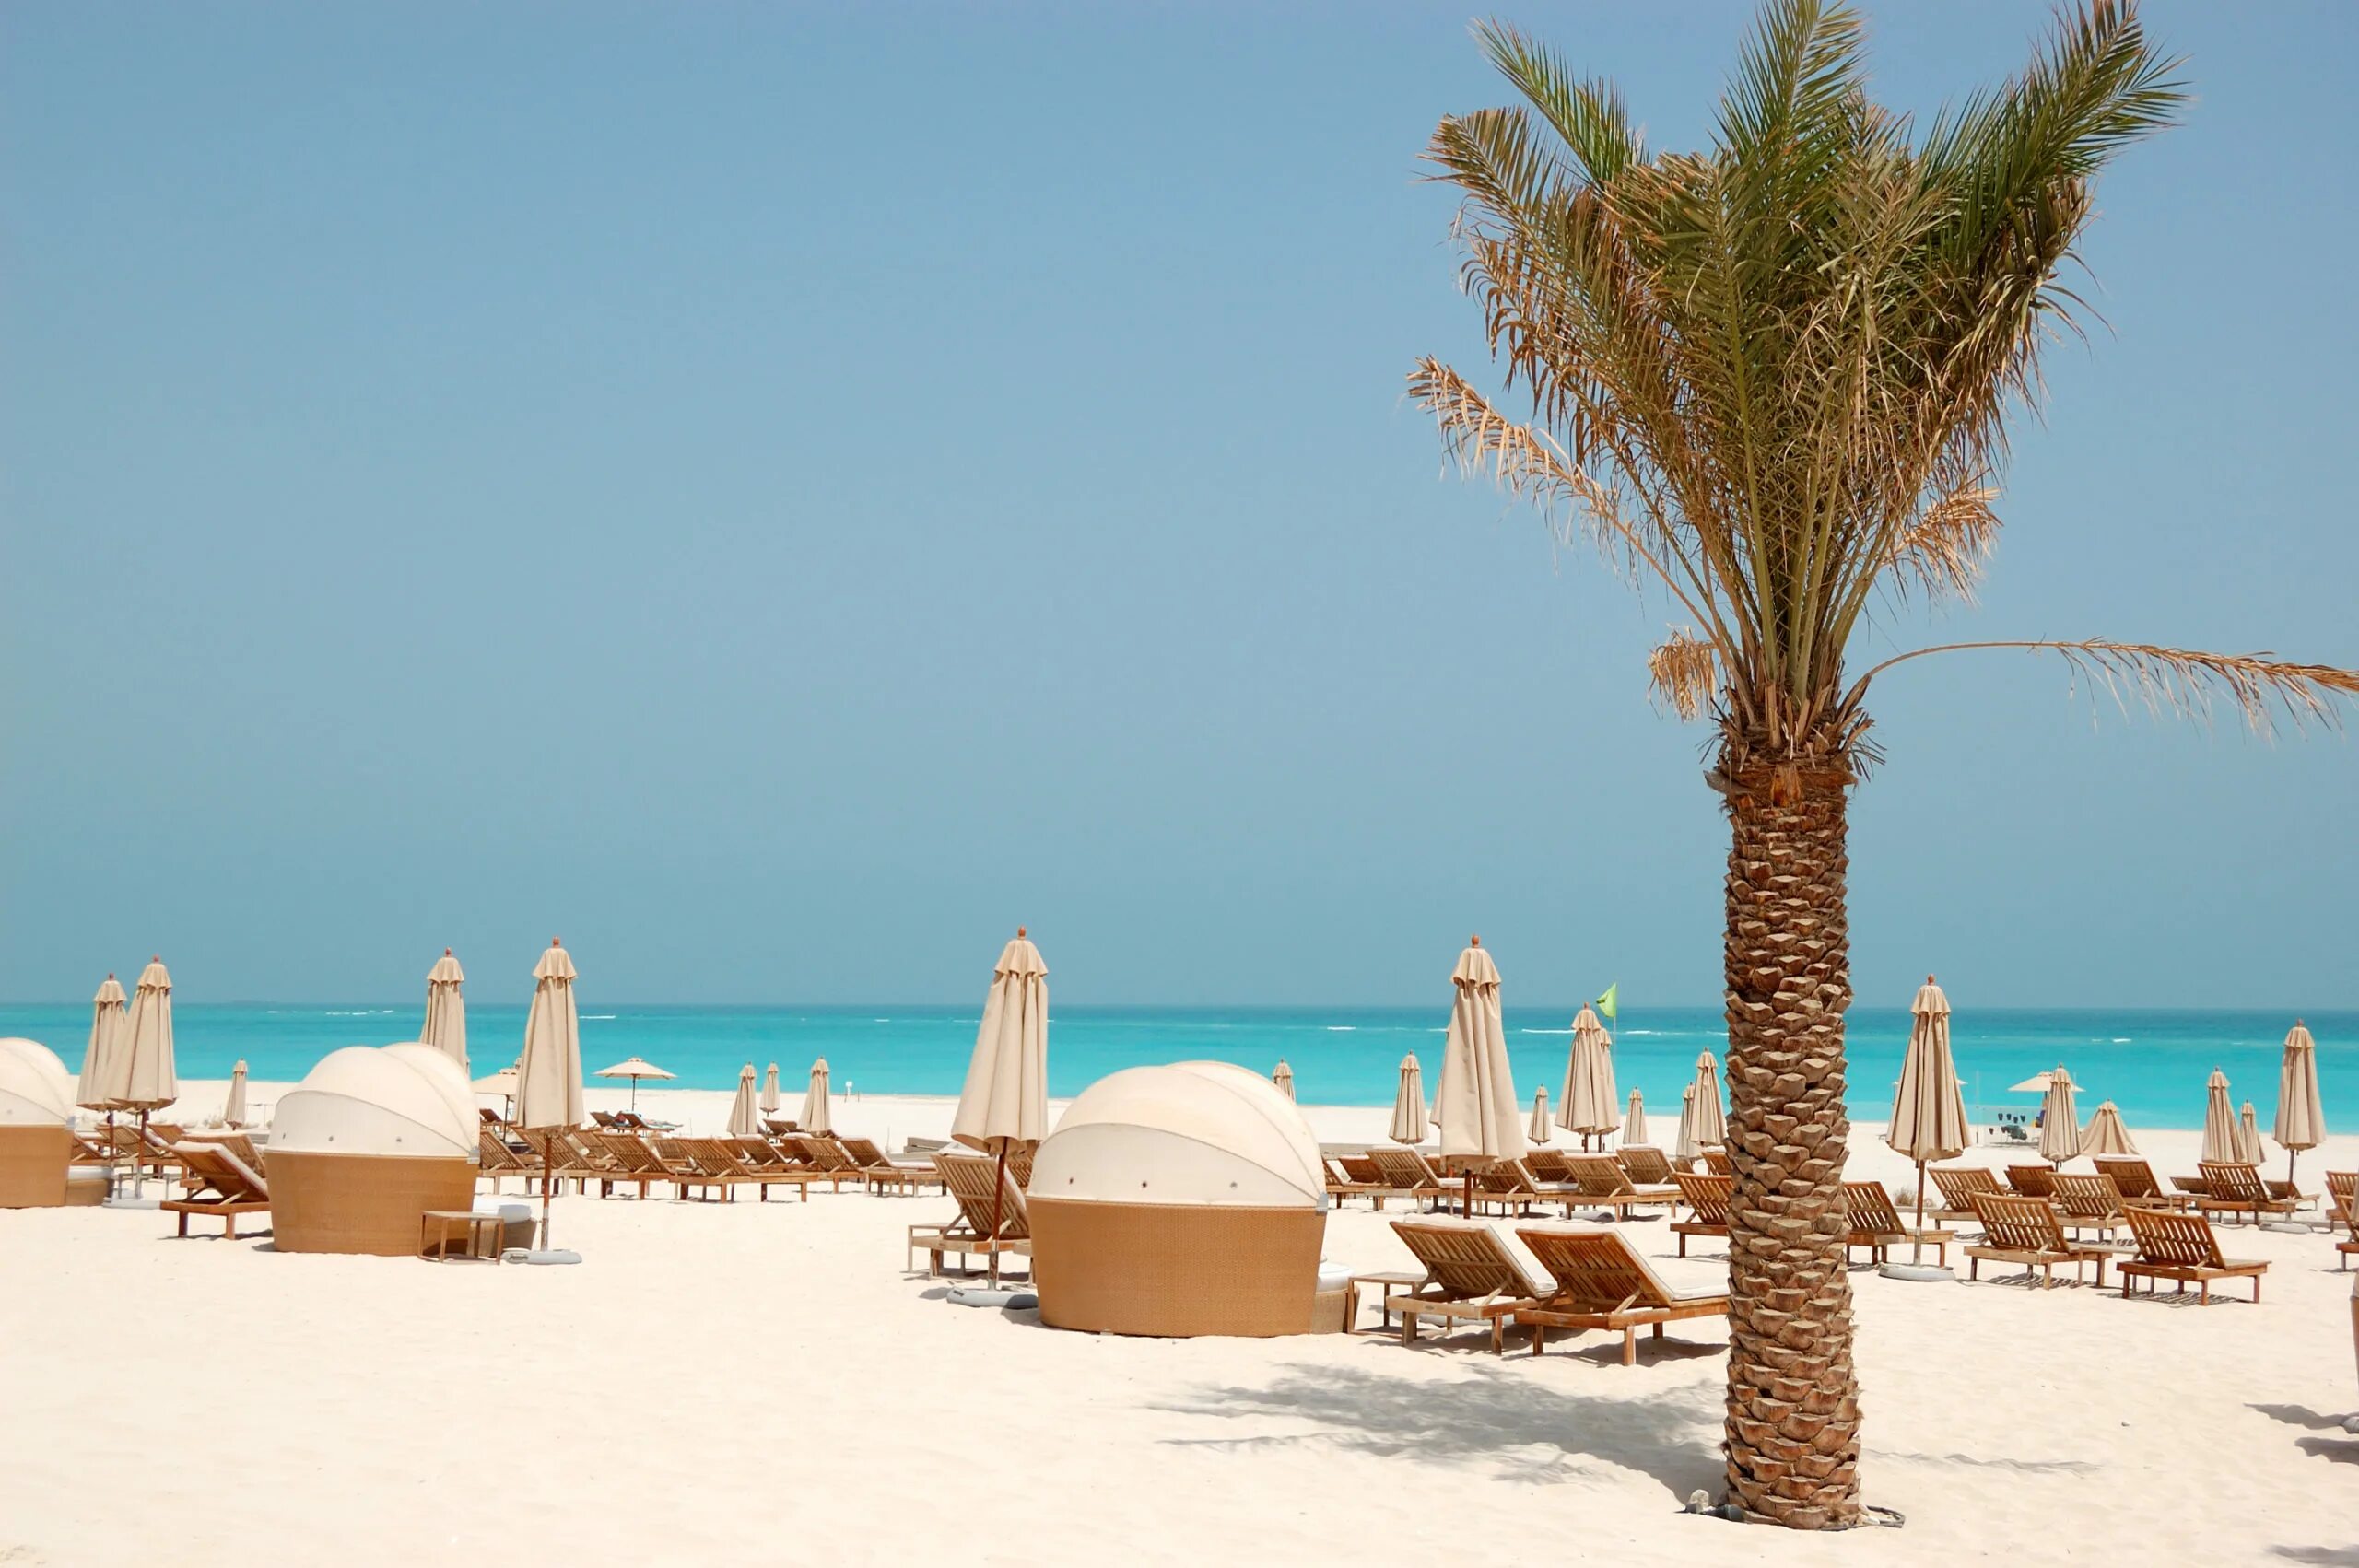 Остров Саадият Абу-Даби. Пляж Саадият Абу-Даби. Пляж острова Саадият Дубай. Остров Саадият Абу-Даби фото.